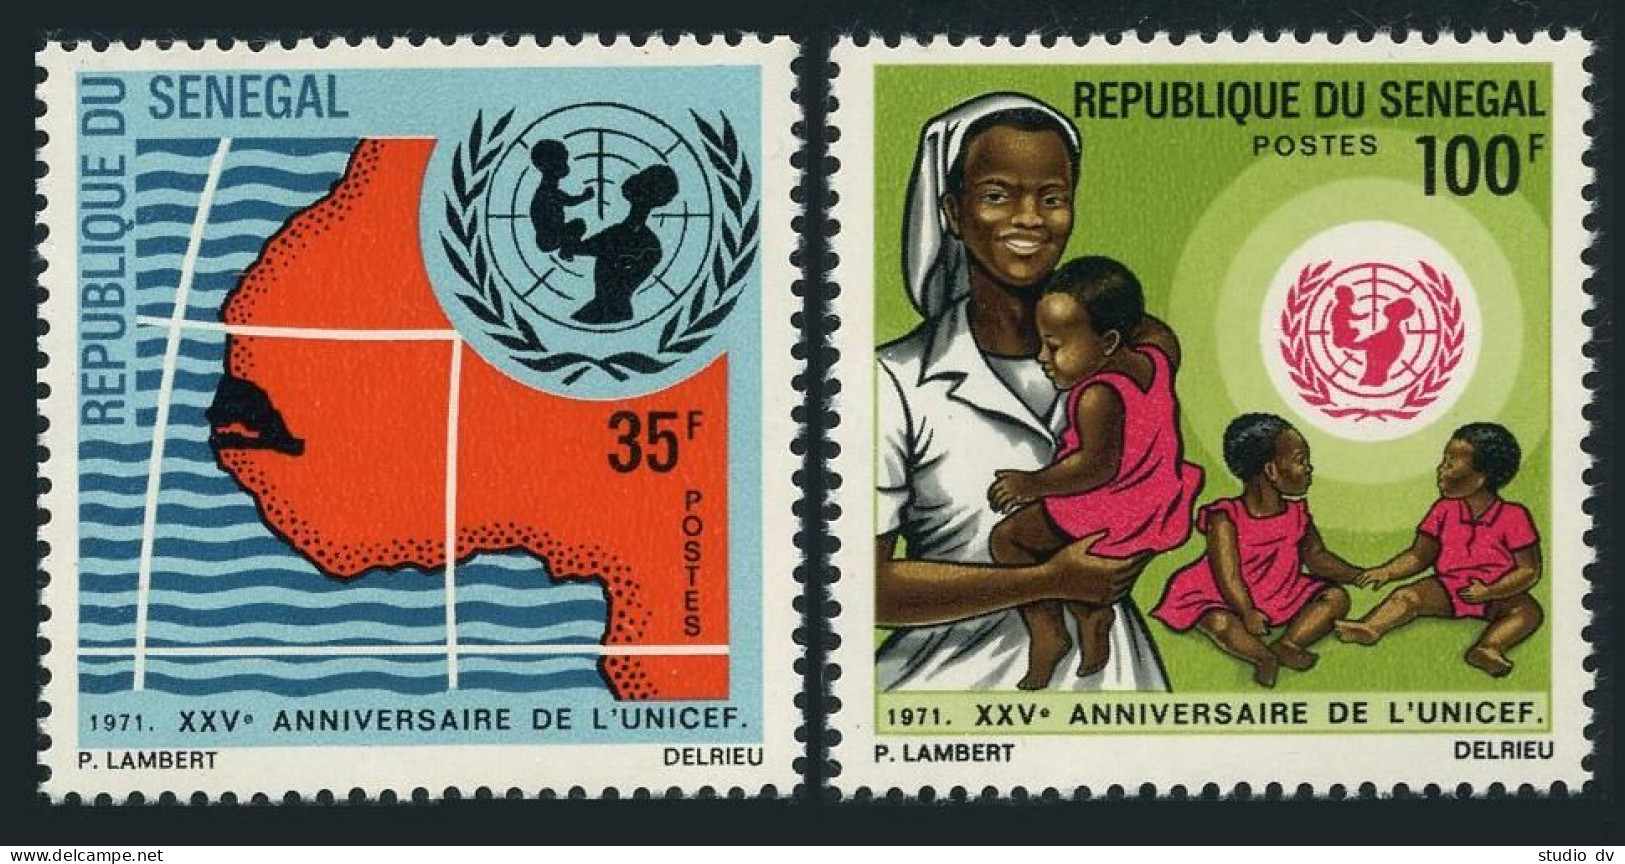 Senegal 352-353,MNH.Michel 472-473. UNICEF,25th Ann.1971.Map,Nurse,children. - Senegal (1960-...)